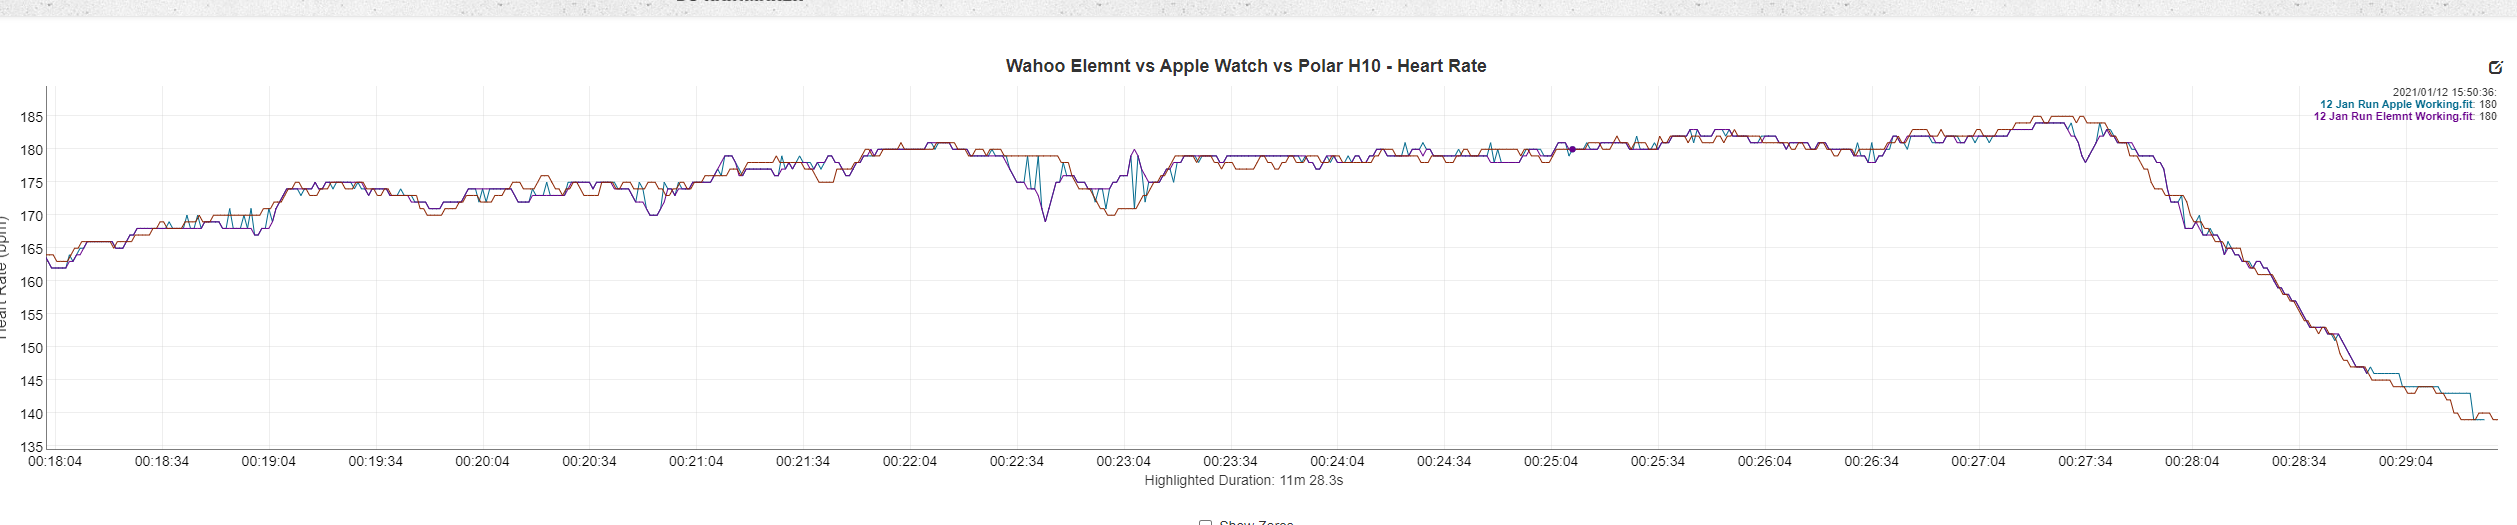 Wahoo Elemnt Comparison Heart Rate